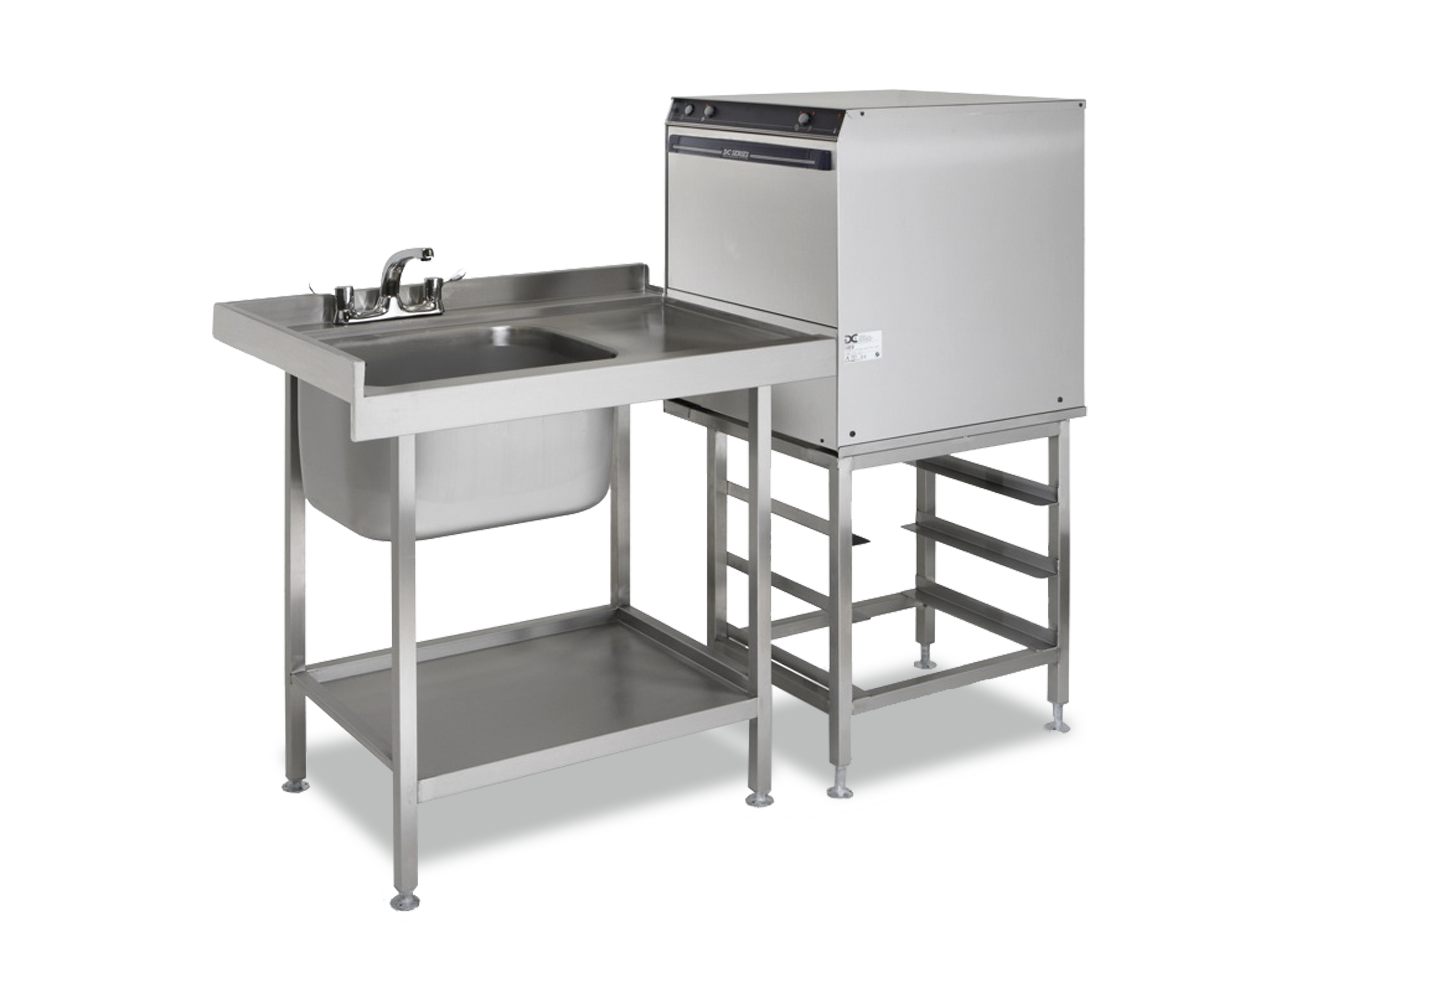 Commercial Stainless Steel Sink - Bespoke Single Bowl Sink with Basket Slide for Frontloading Dishwasher